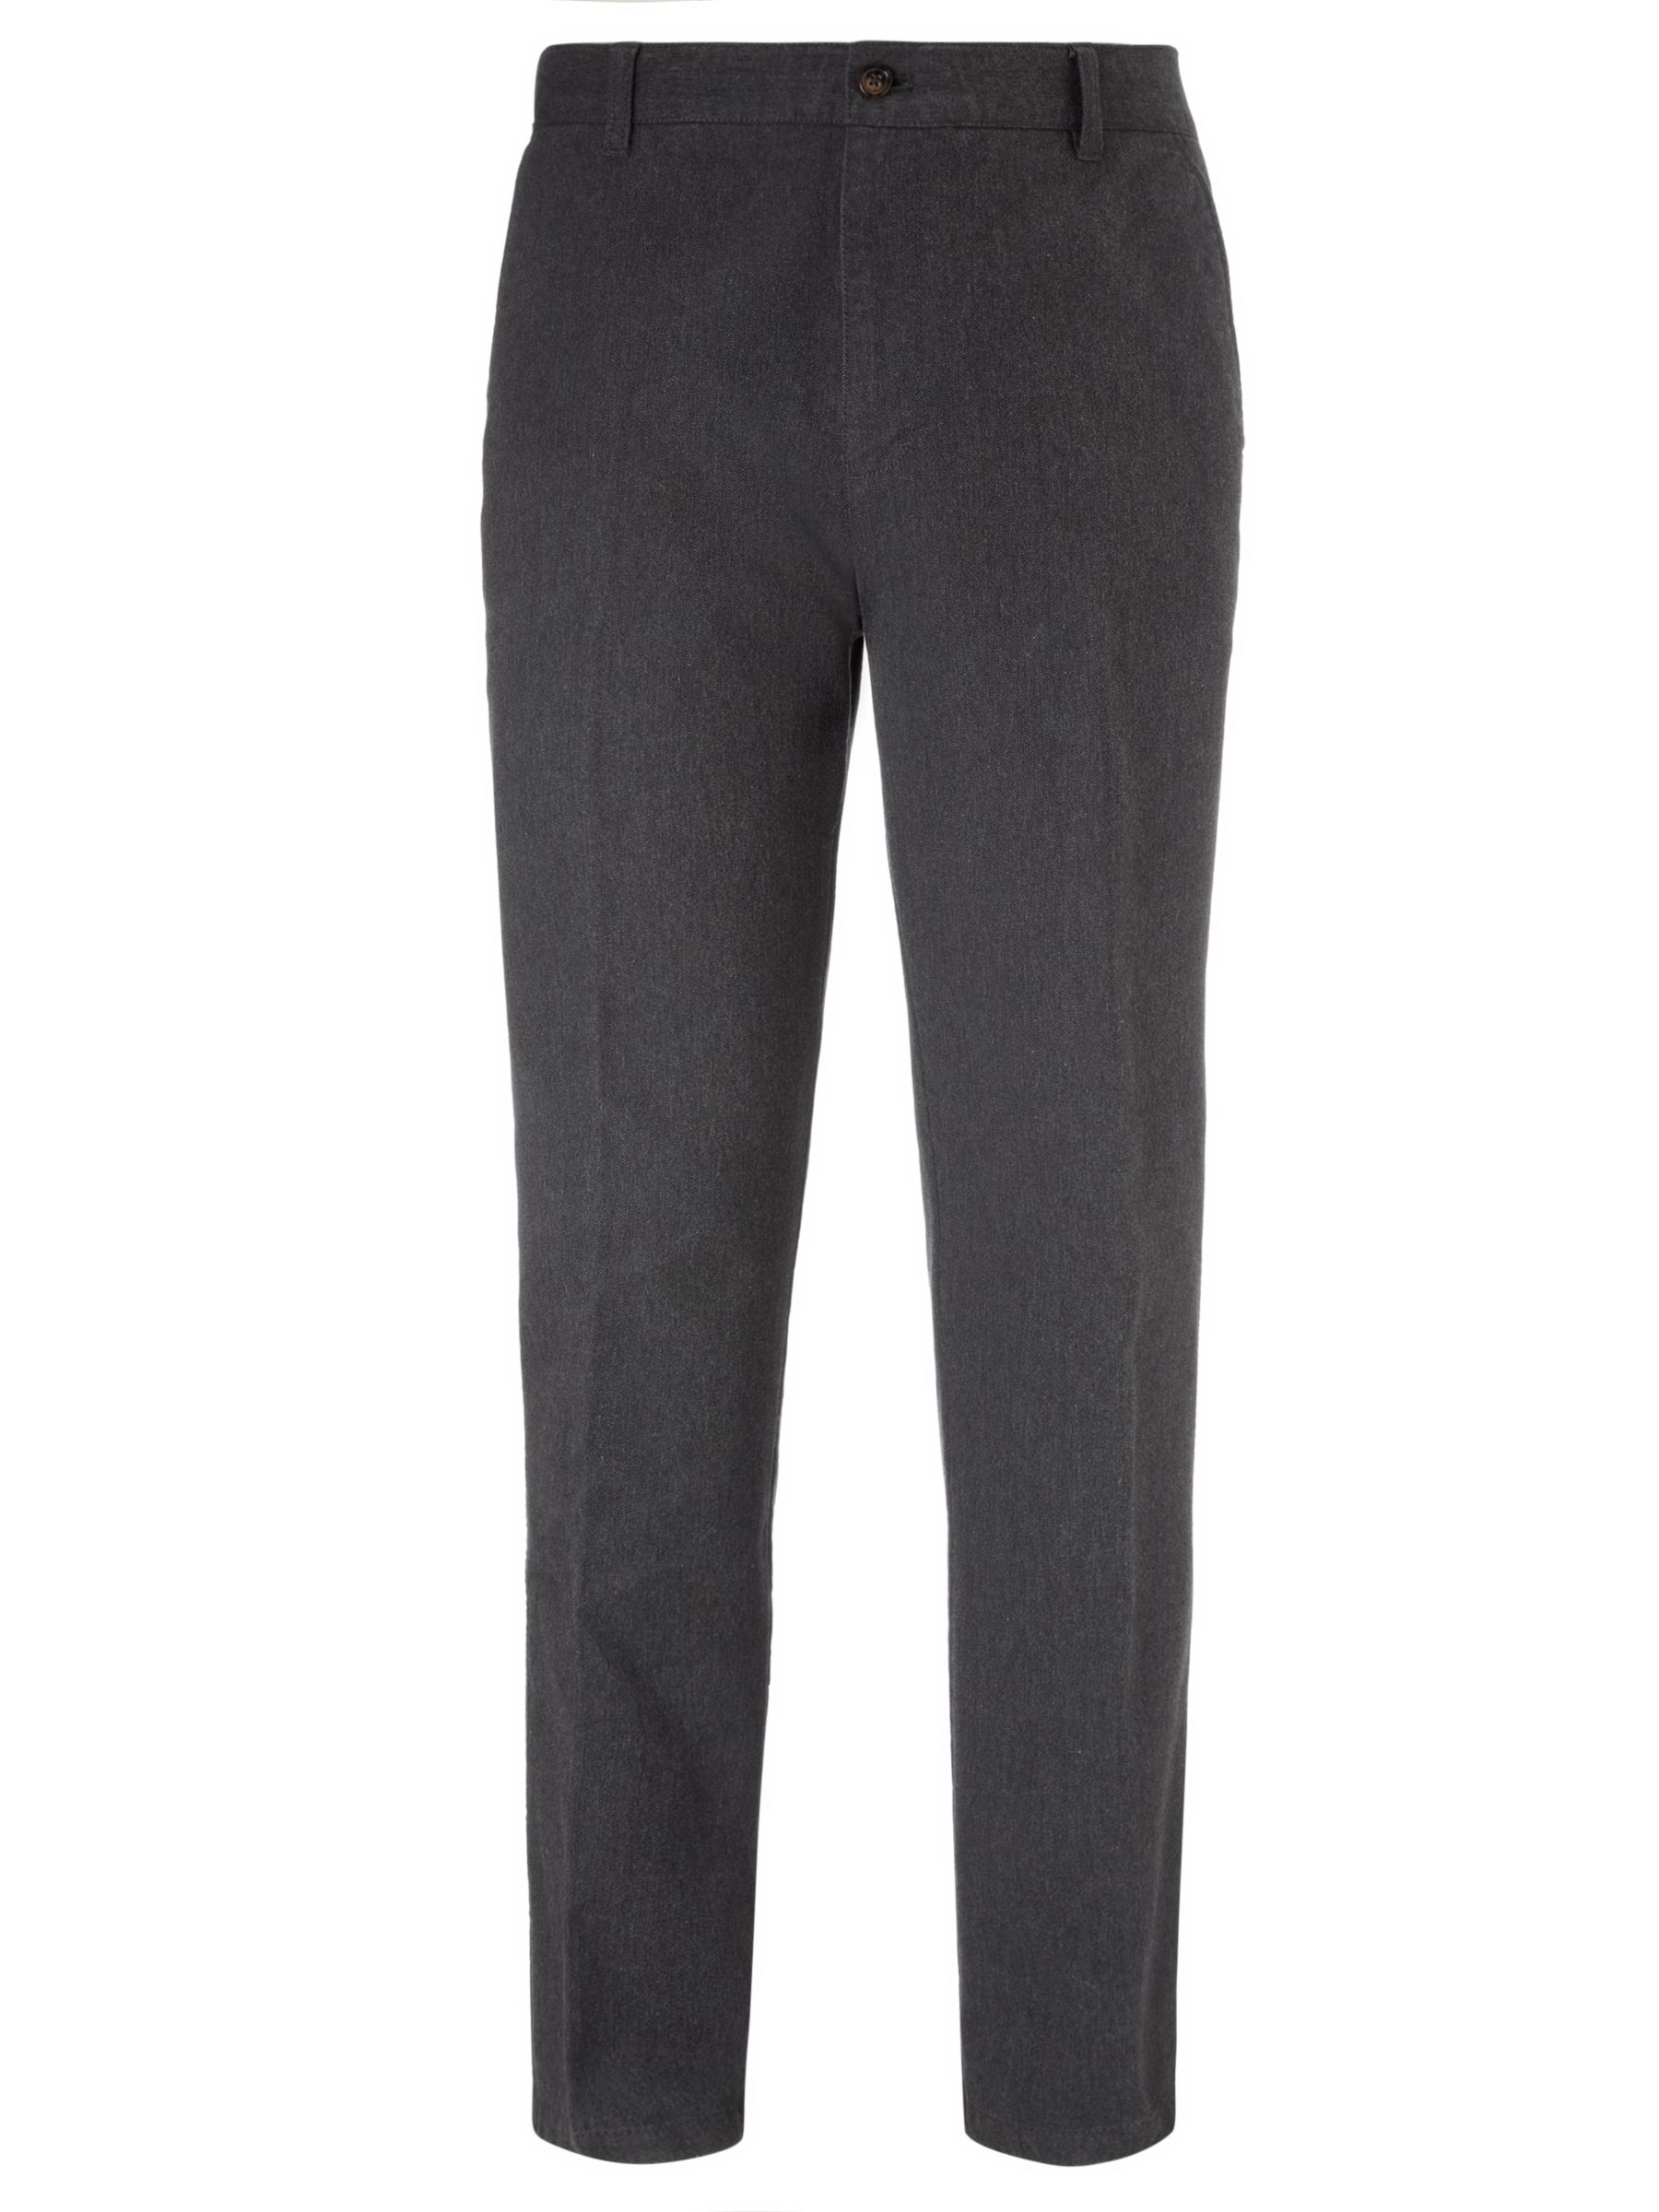 John Lewis & Partners Men Pinpoint Trousers, Grey, 34S